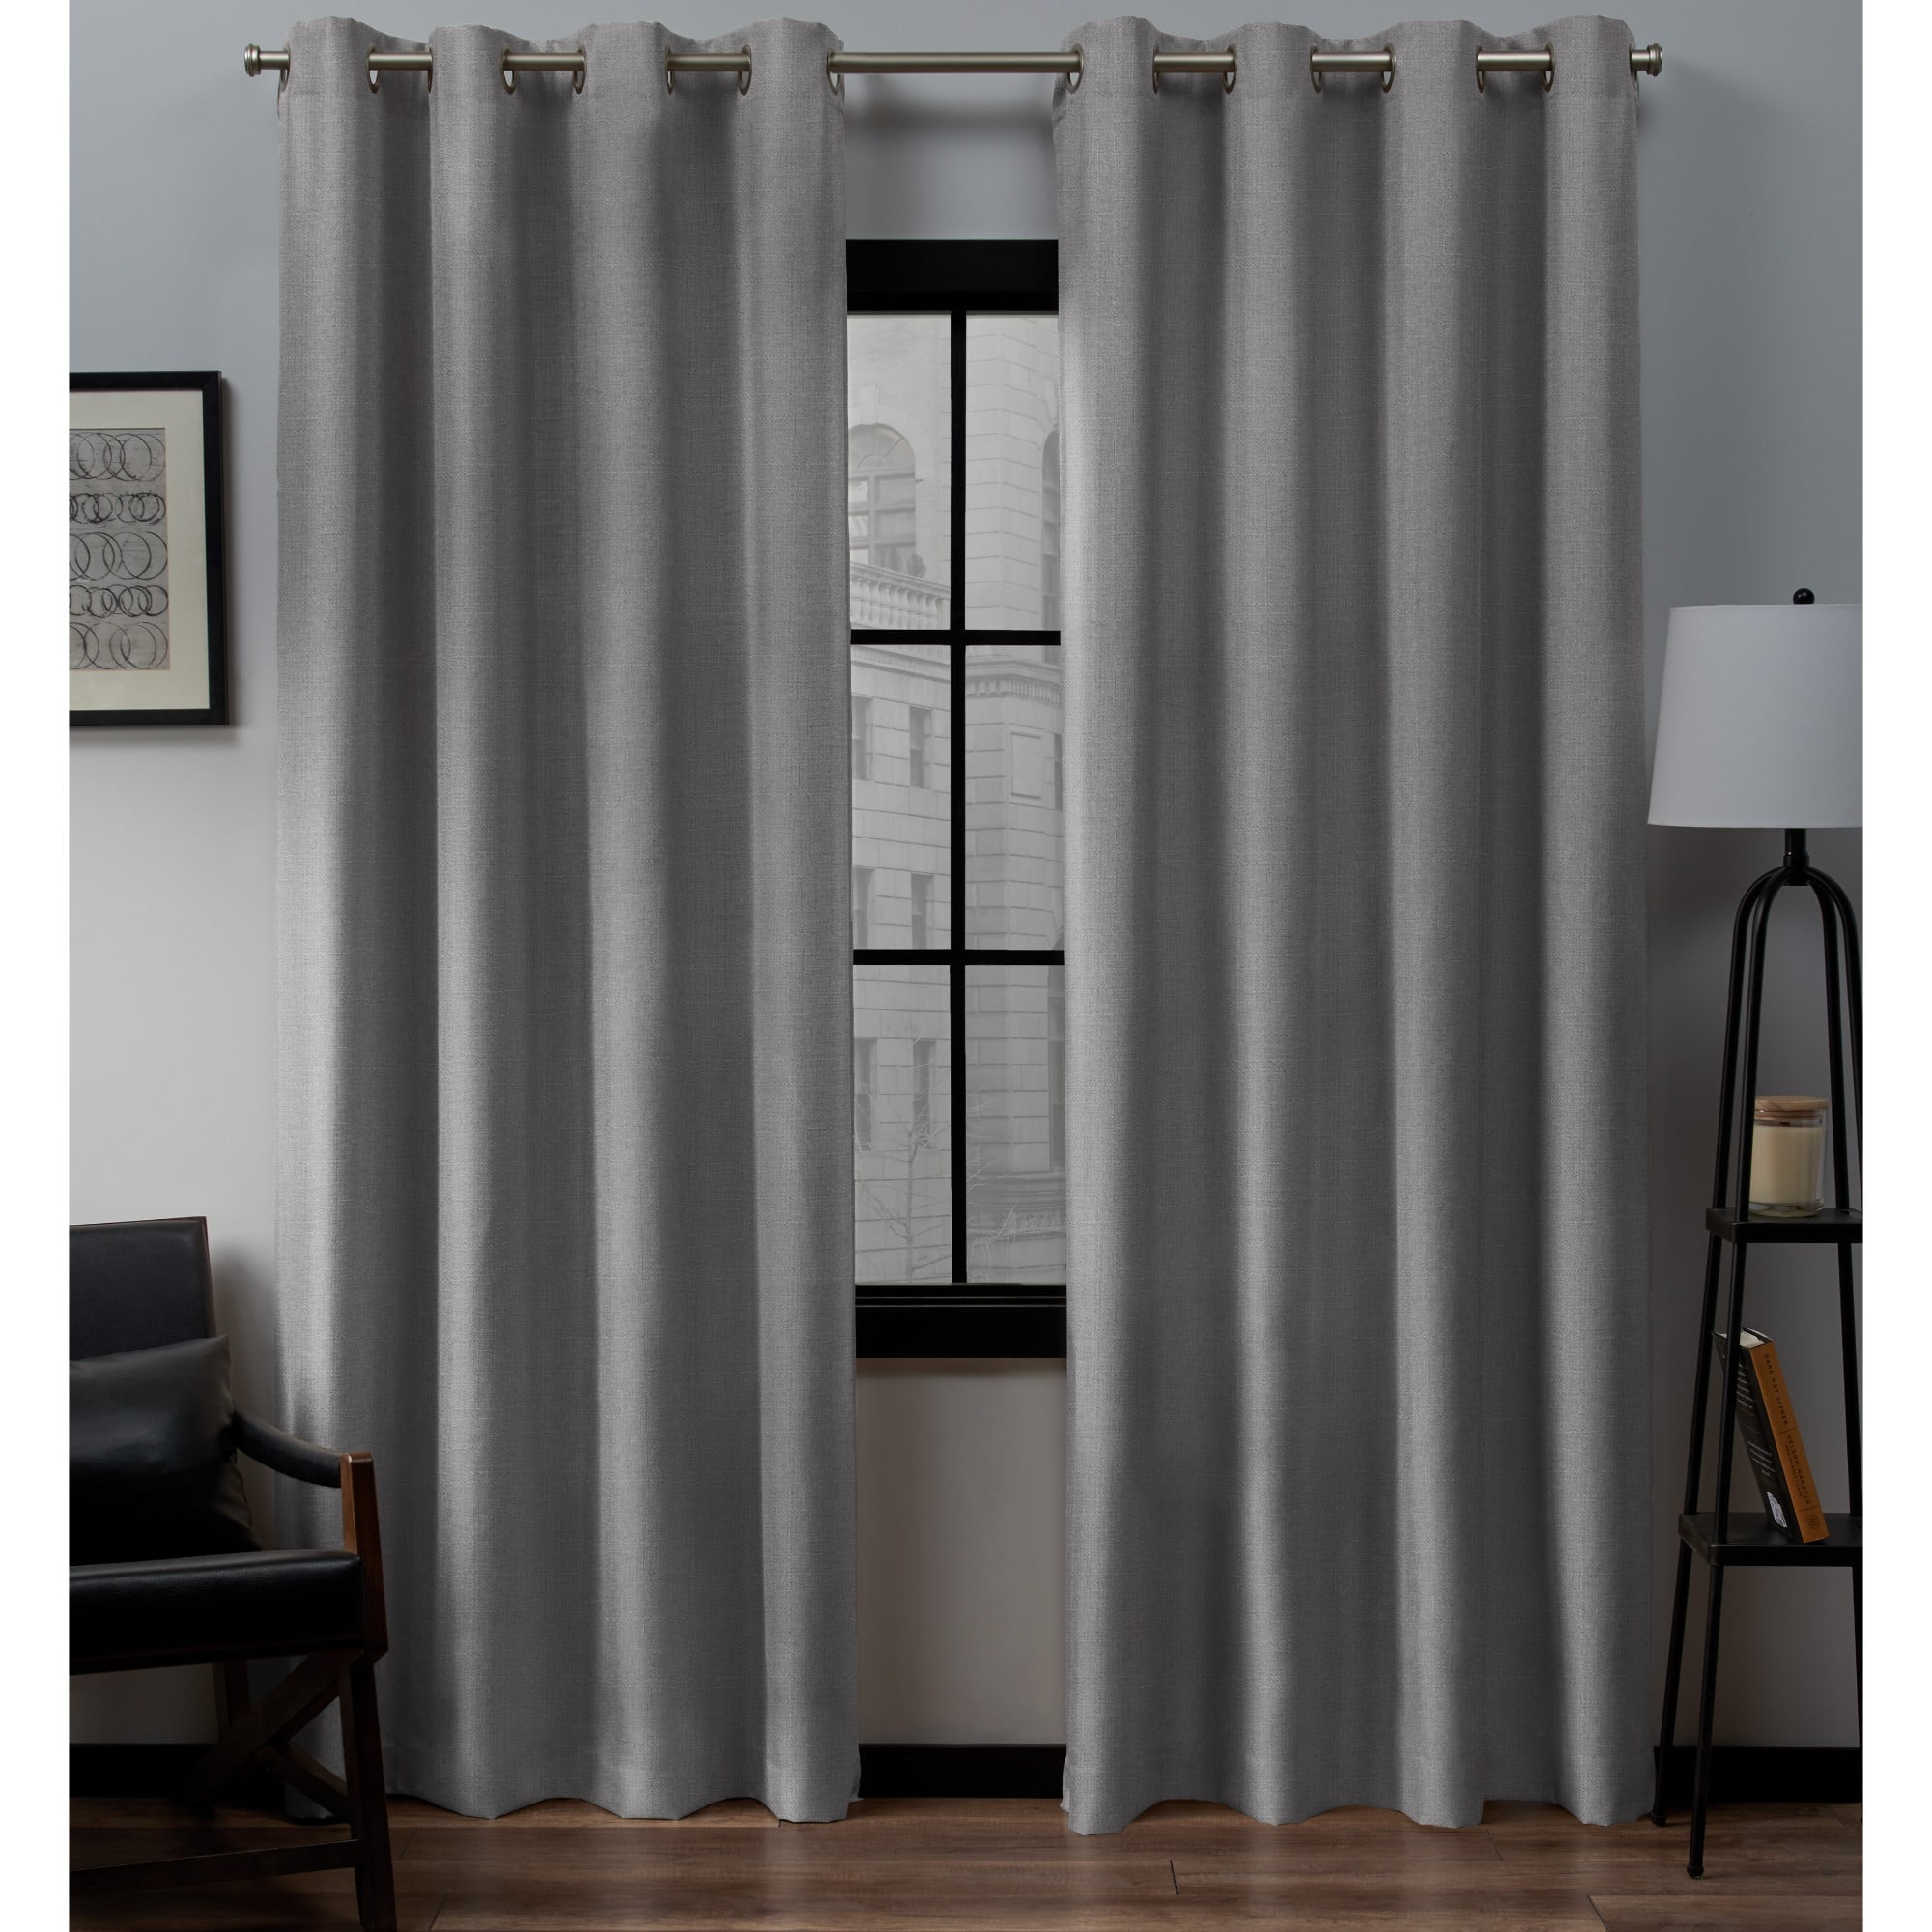 Grommet Top Linen Curtain Panel - Eyelet Window Treatments - Natural 100% Linen Drapery